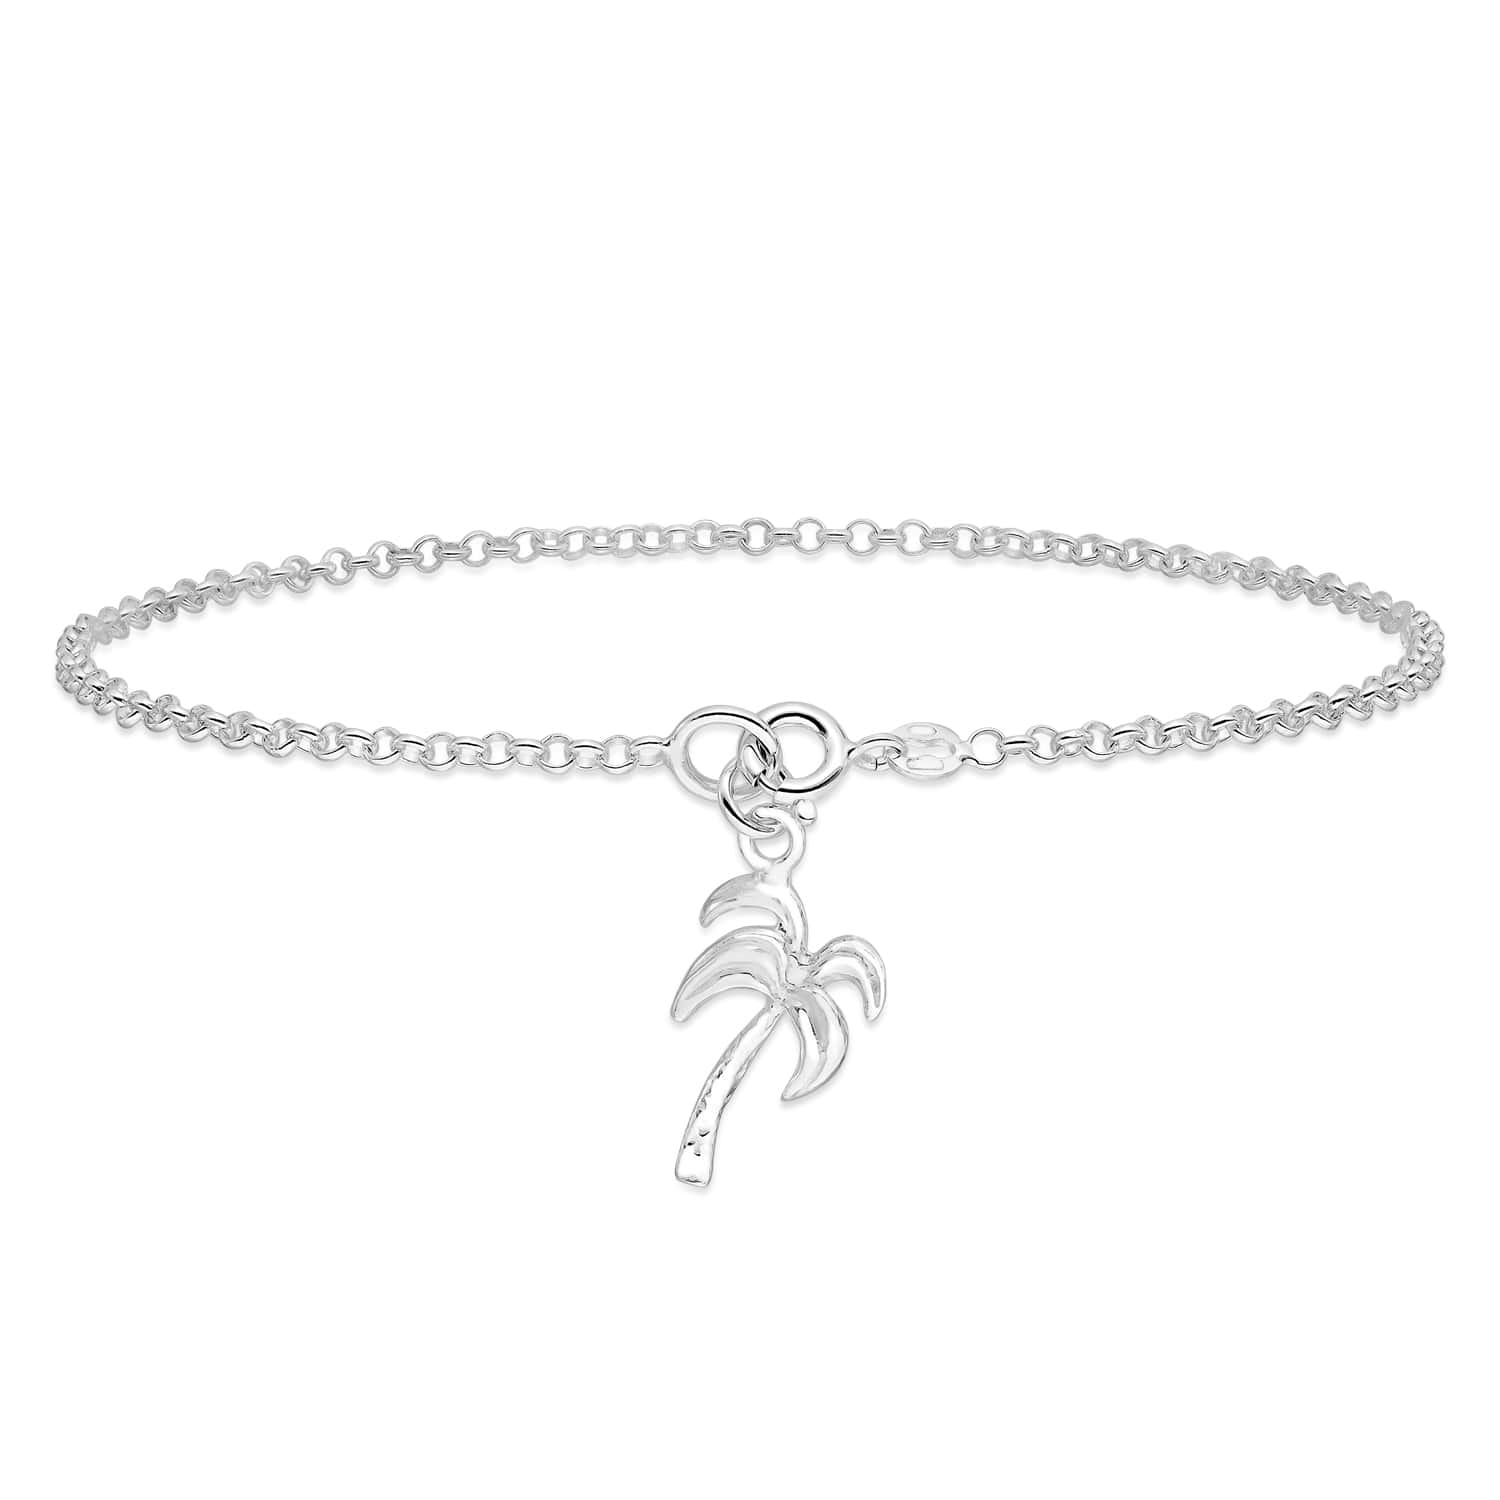 Palm Tree Anklet Bracelet in Sterling Silver